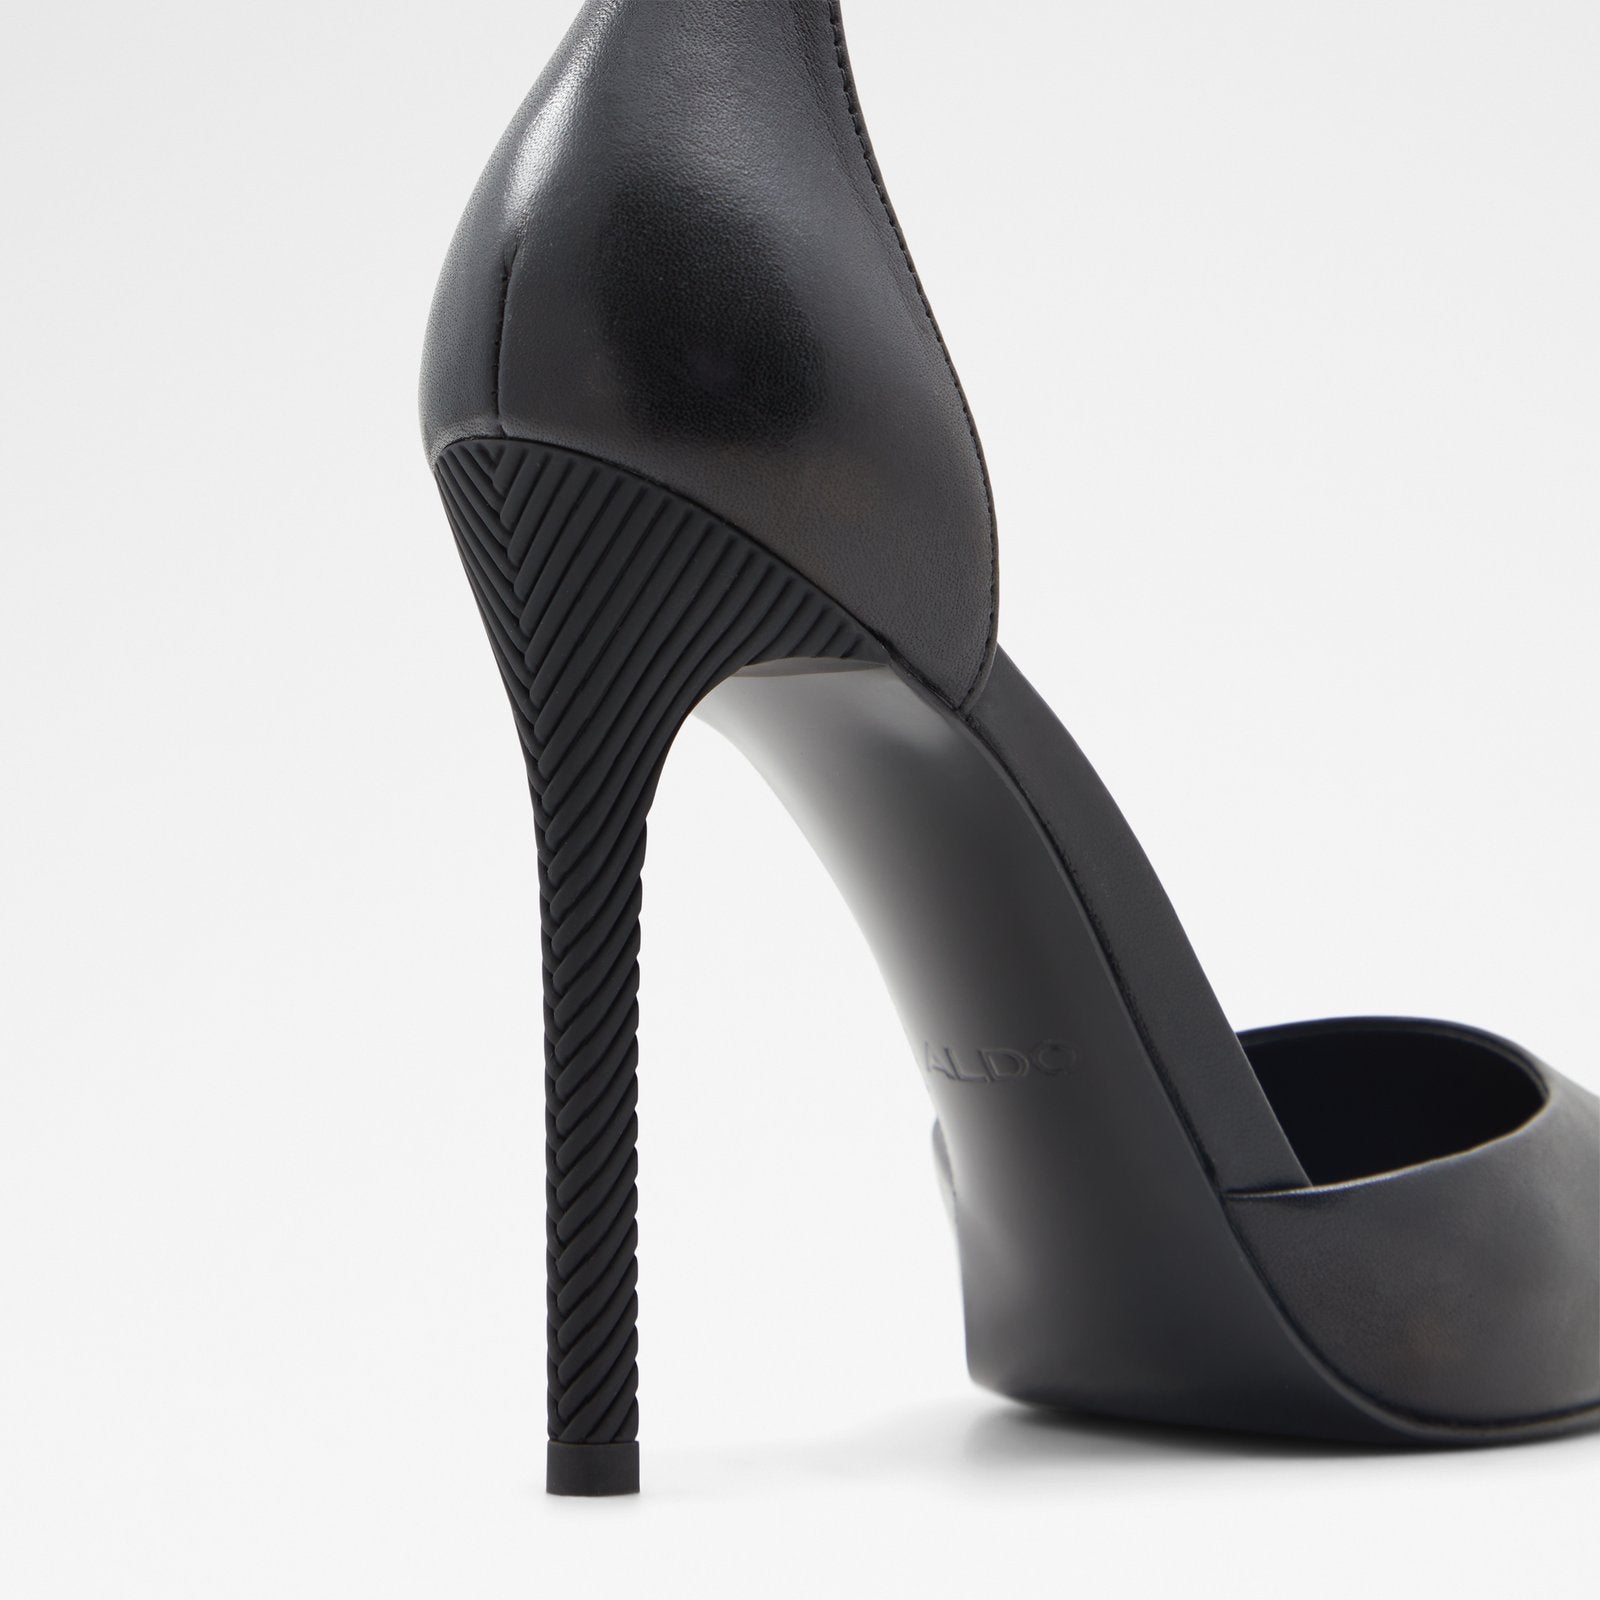 Aldo Black High Heels Womens Size 6 1/2 (missing Back Strap) | eBay